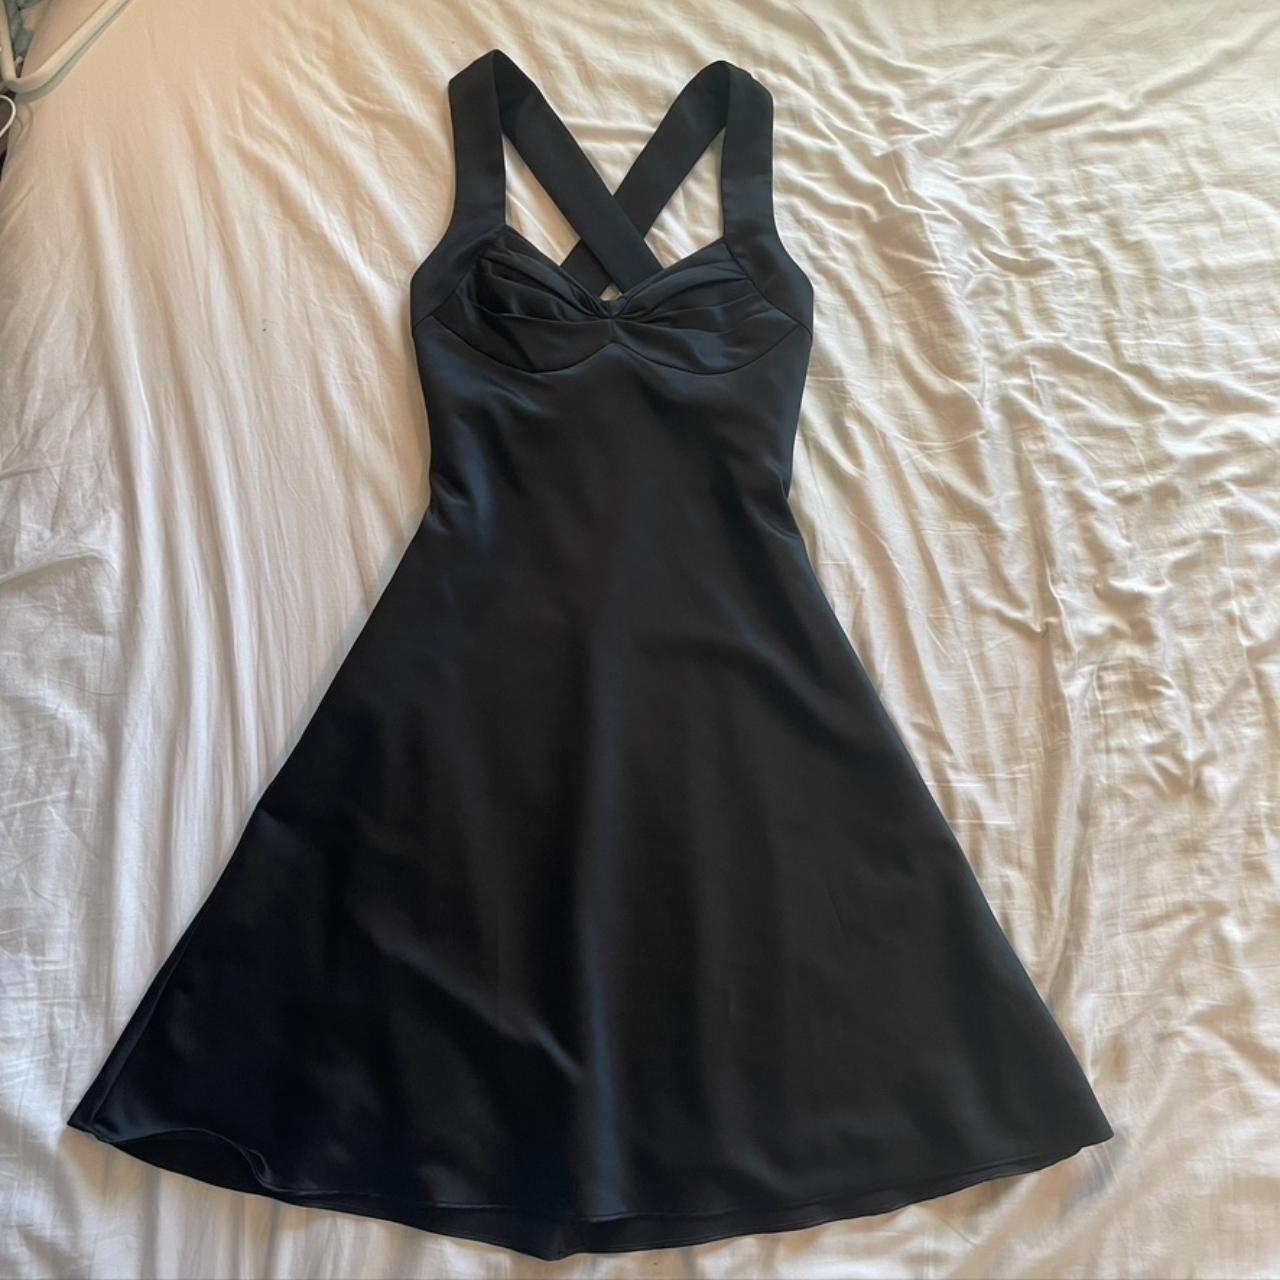 Gorgeous black calvin klein dress. Silk material and... - Depop